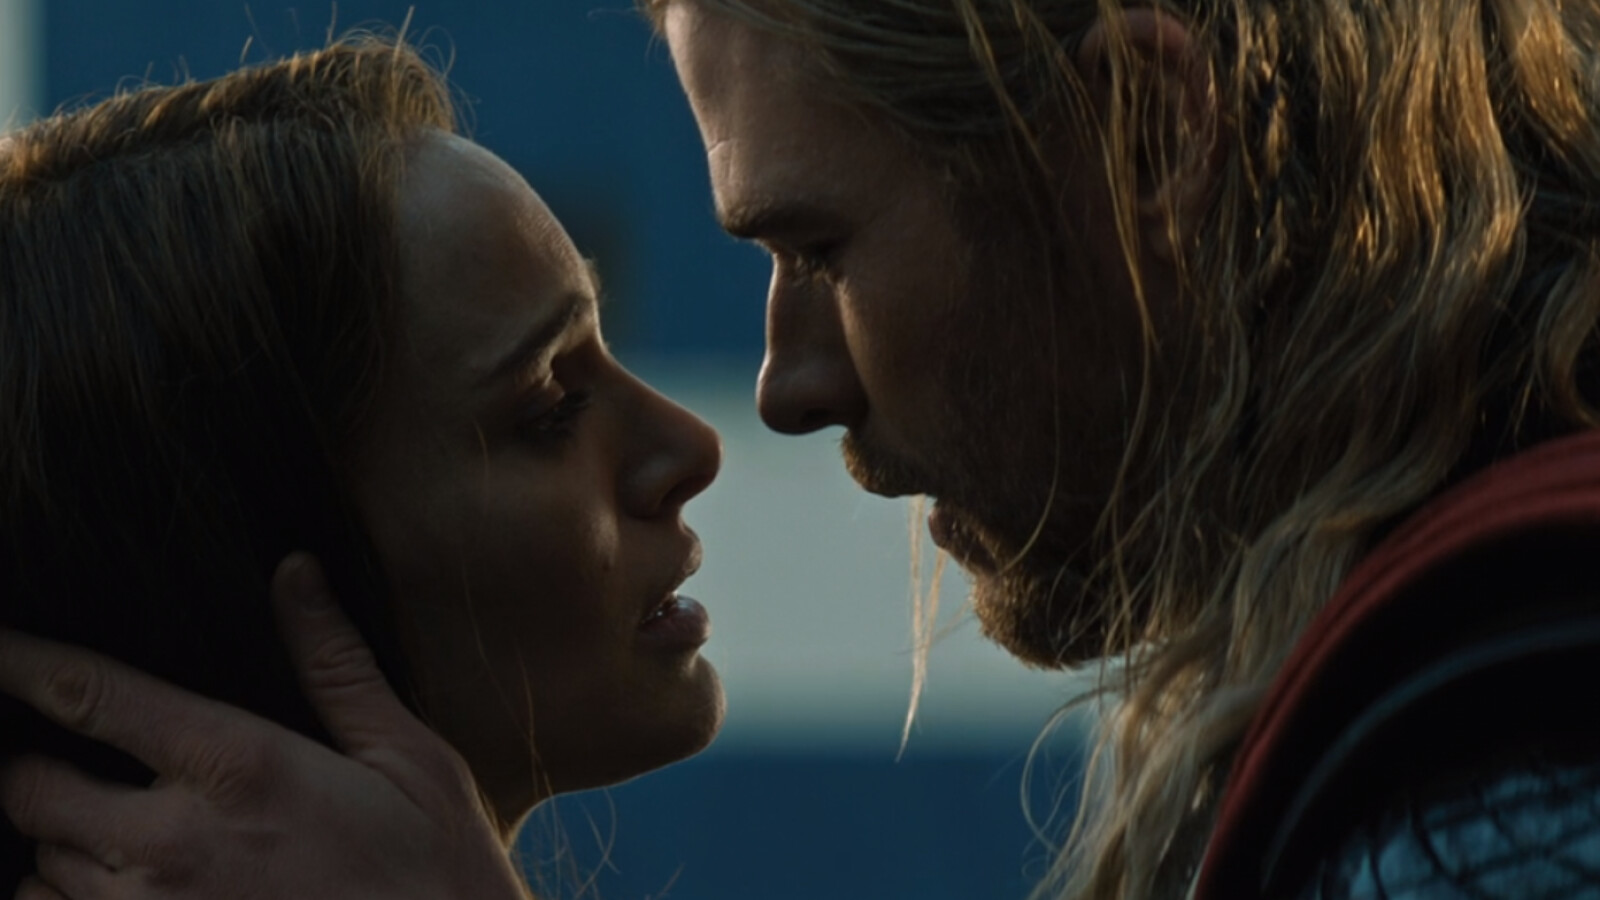 Fotos do set sugerem flashback em 'Thor: Love and Thunder